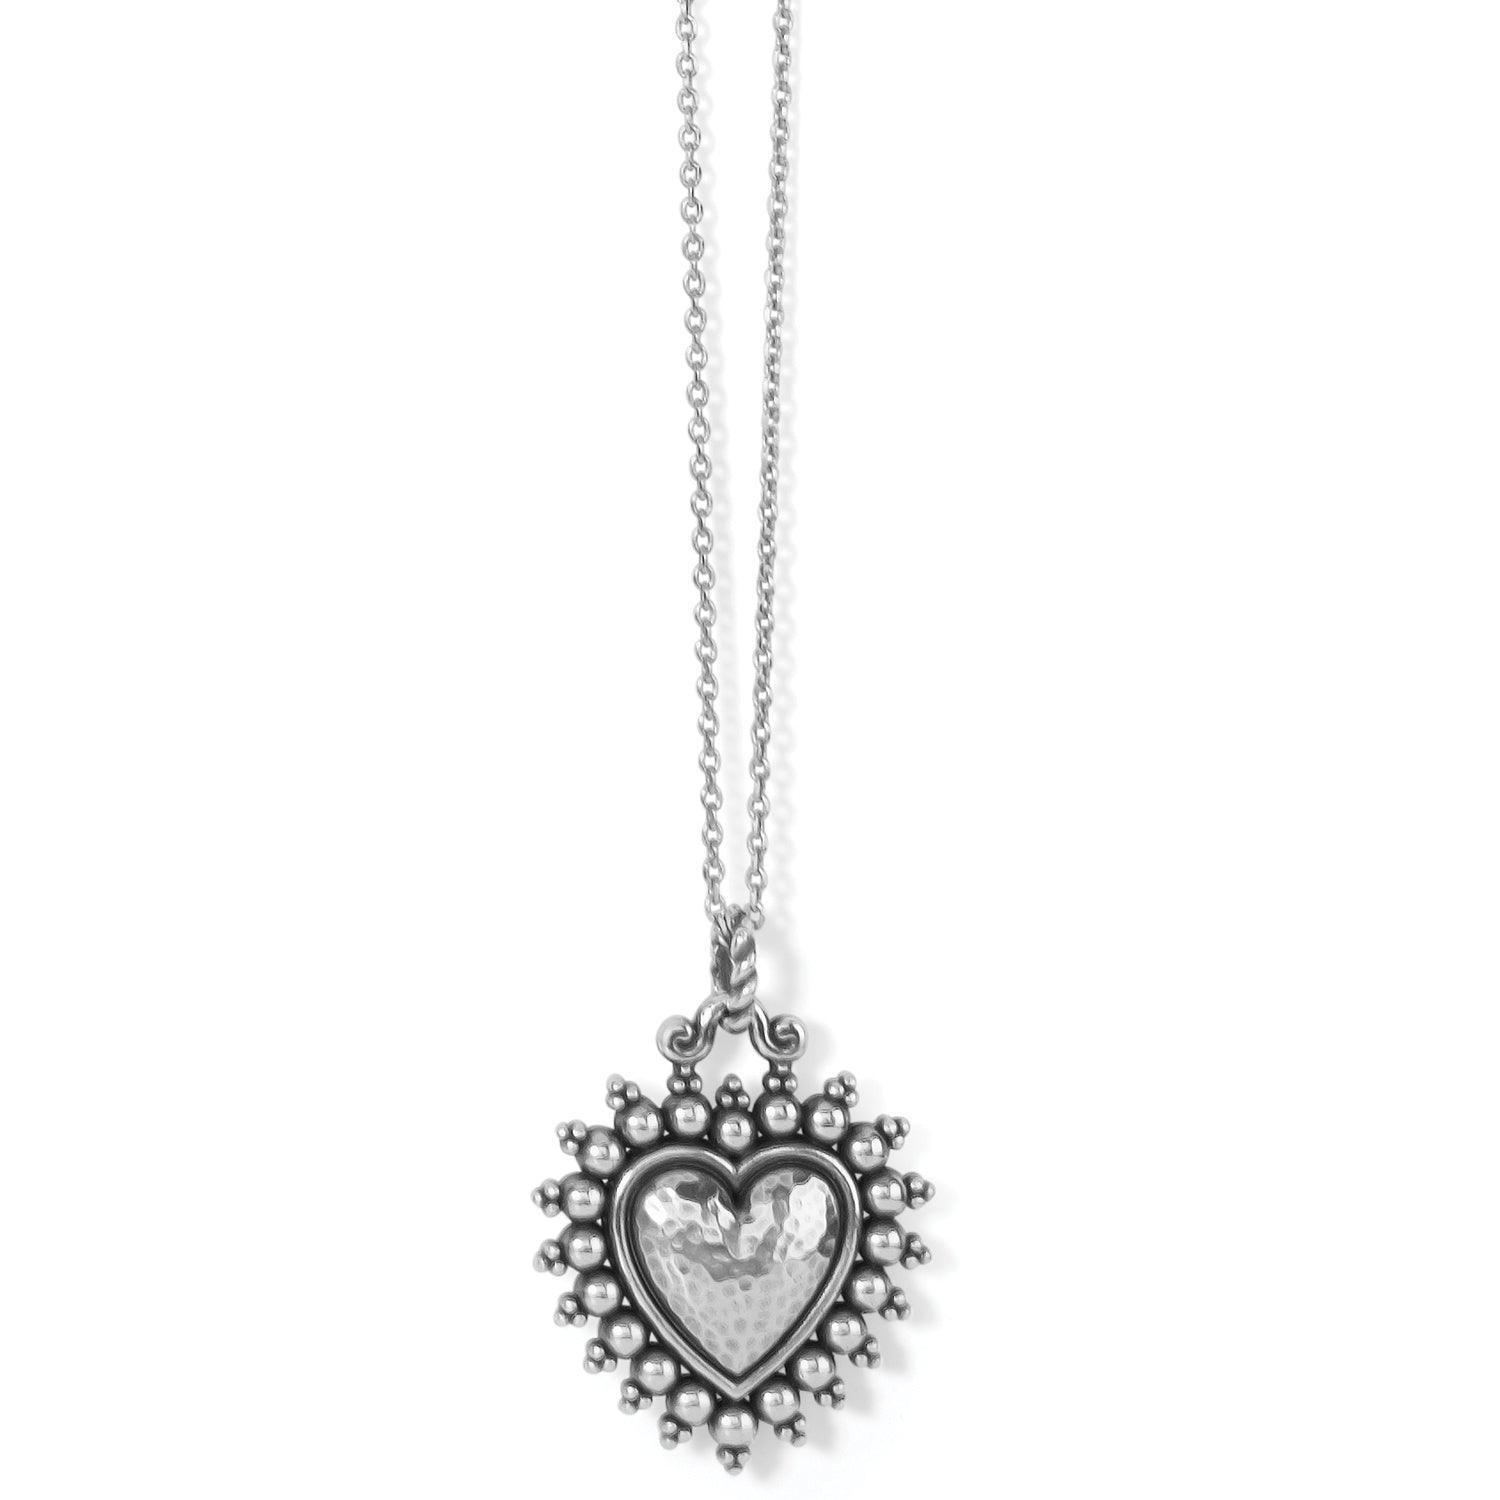 Telluride Small Heart Necklace - The Silver Dahlia